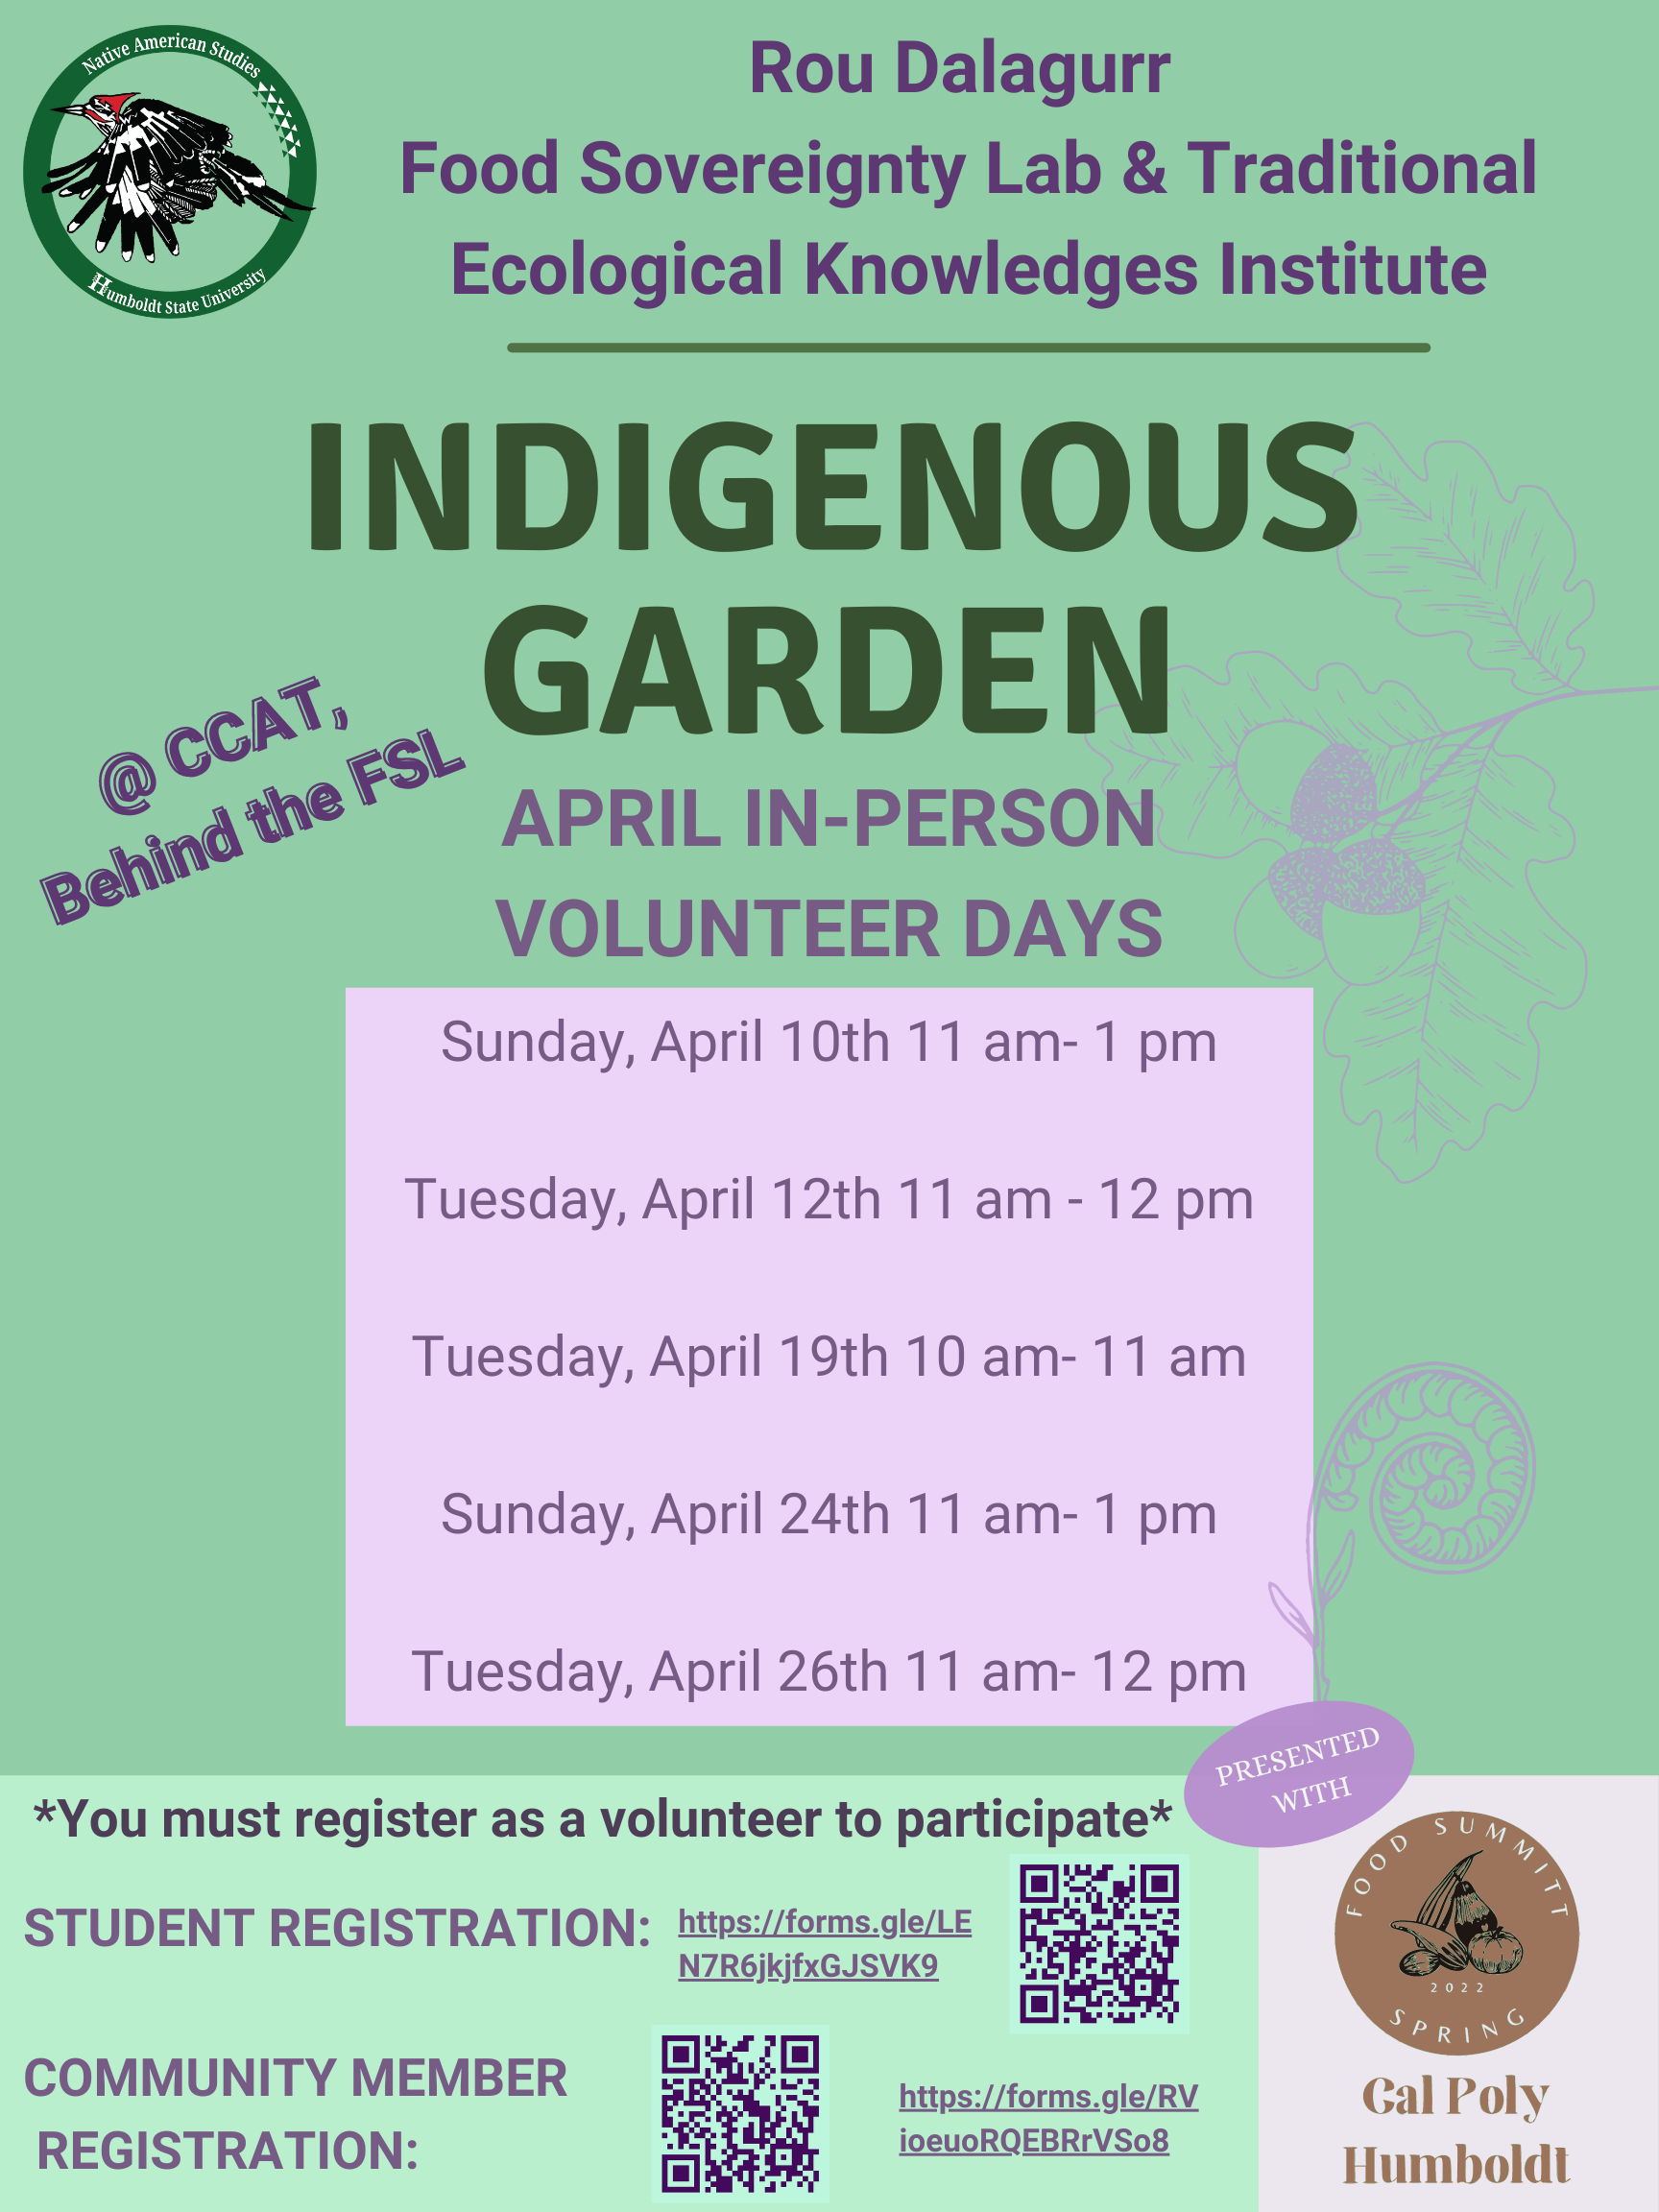 Food Sovereignty Lab Garden Volunteer Days April 10th 11am-1pm at CCAT 